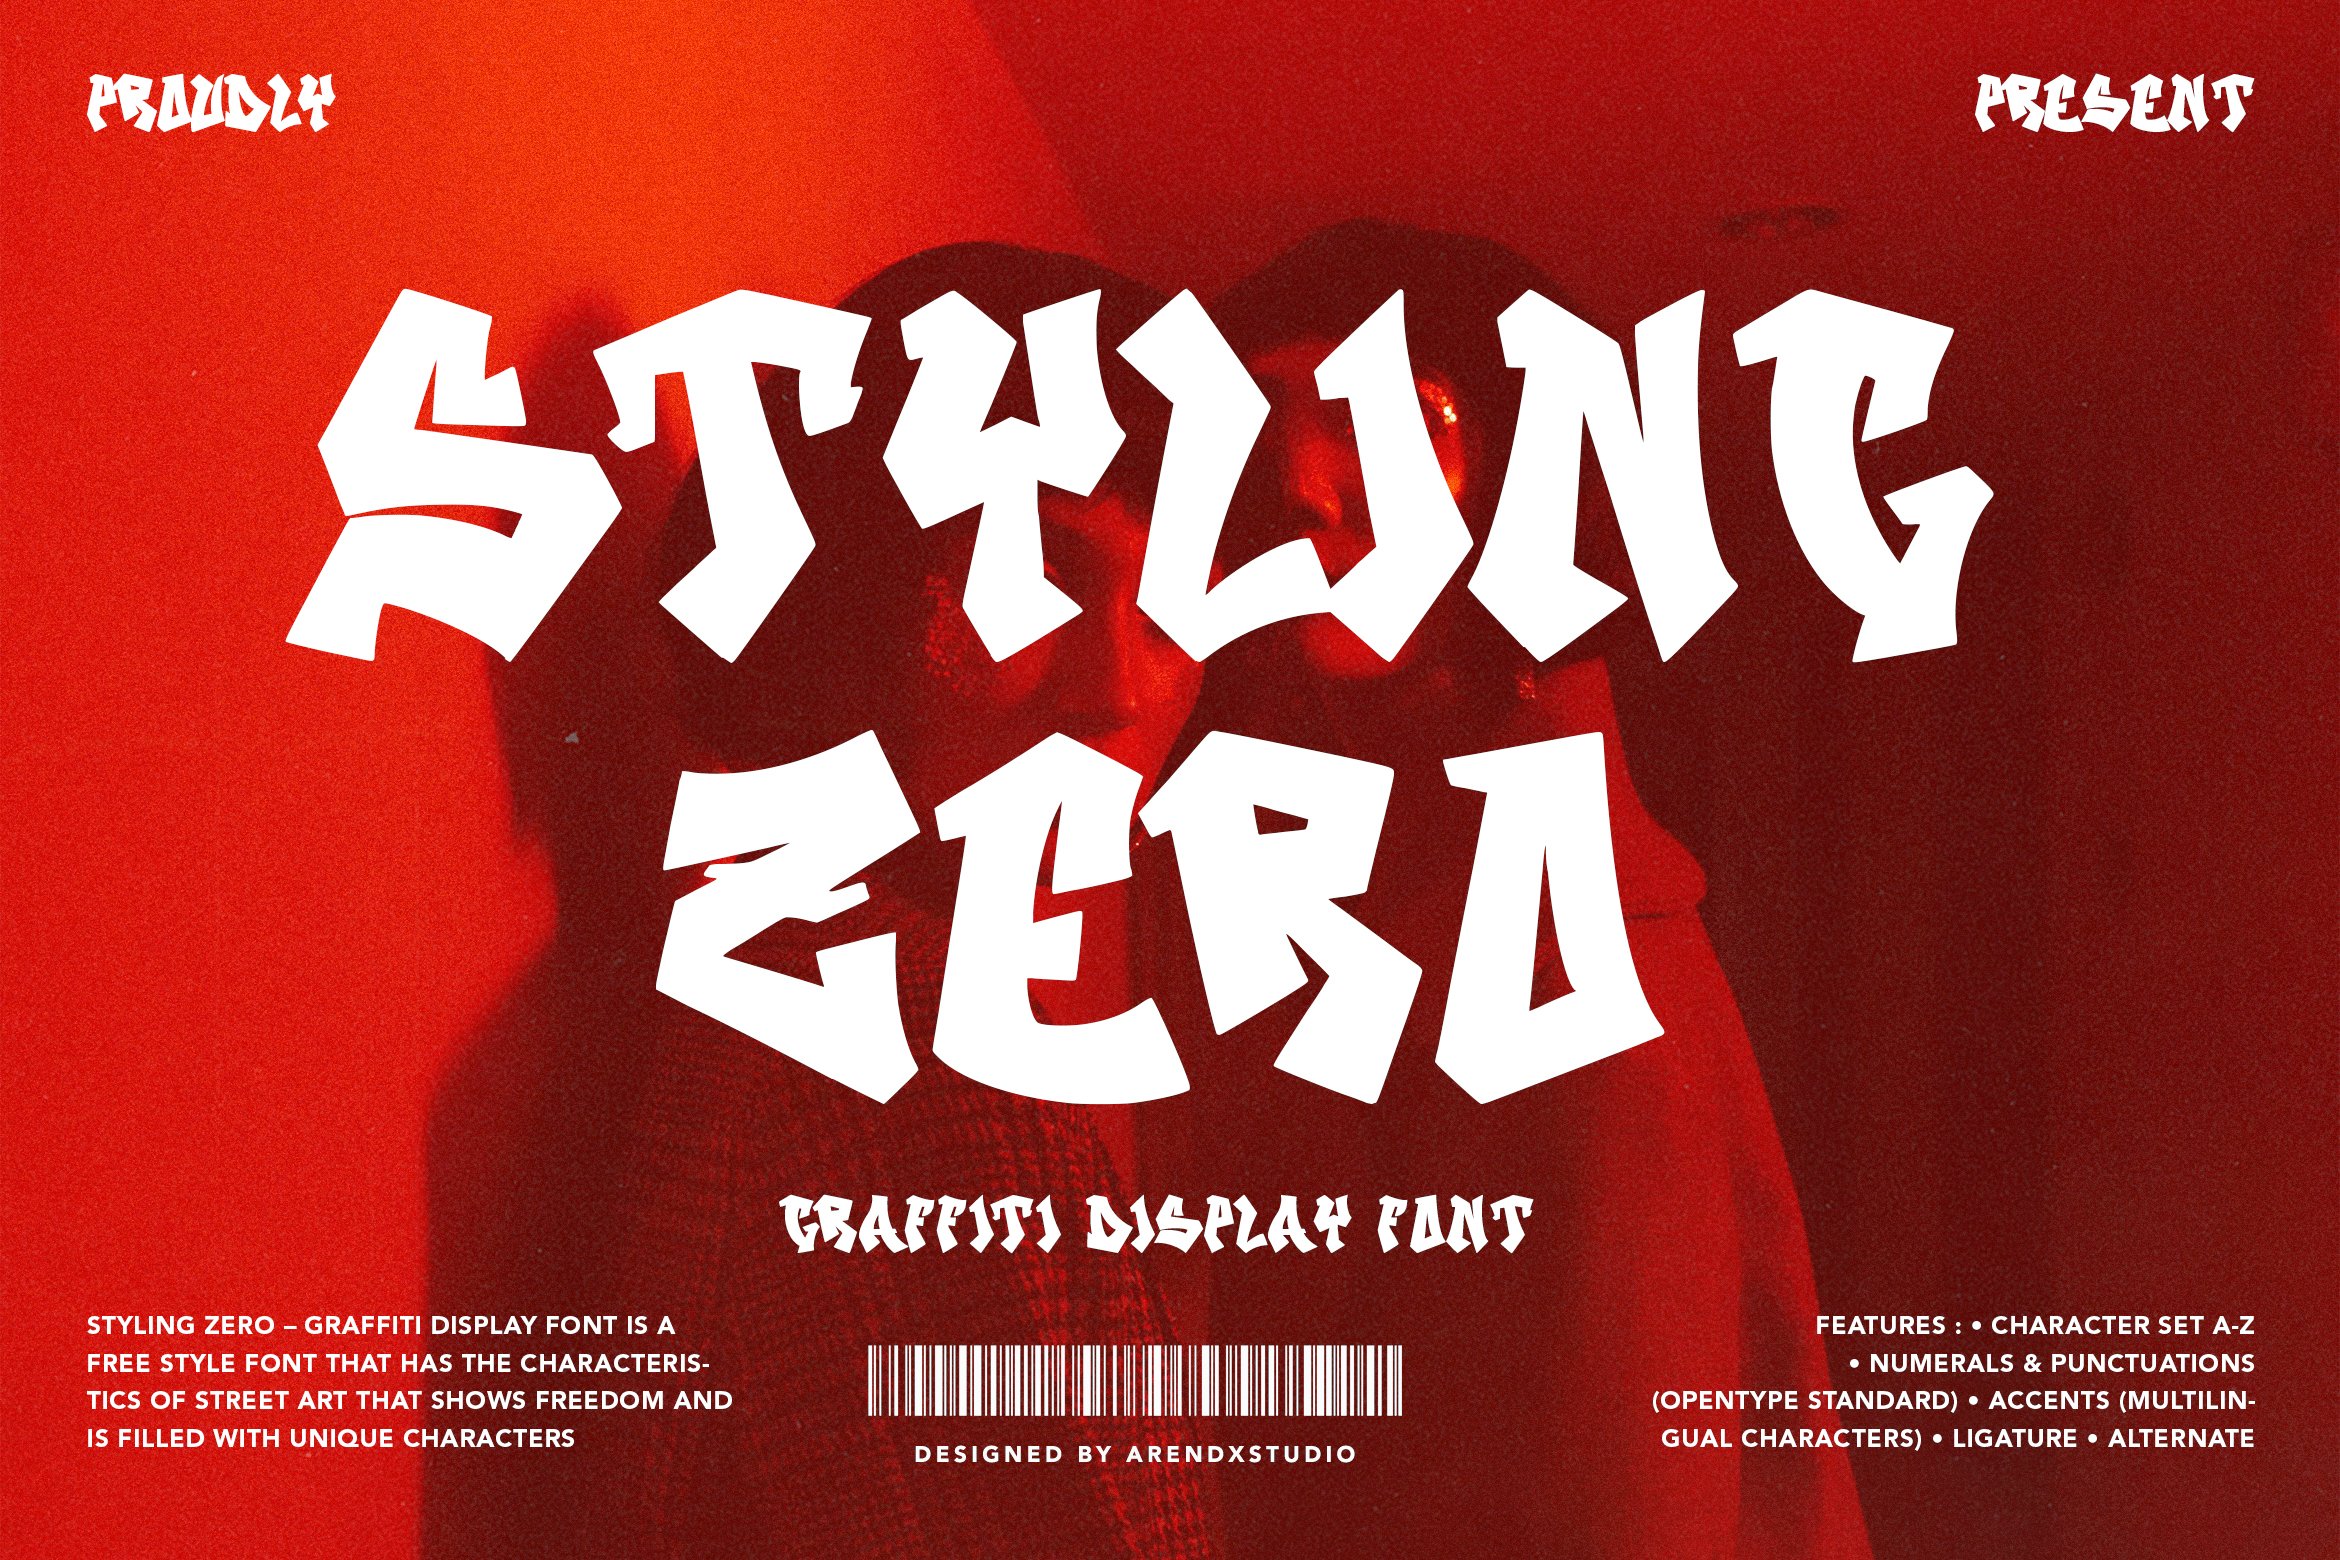 Styling Zero - Graffiti Display Font cover image.